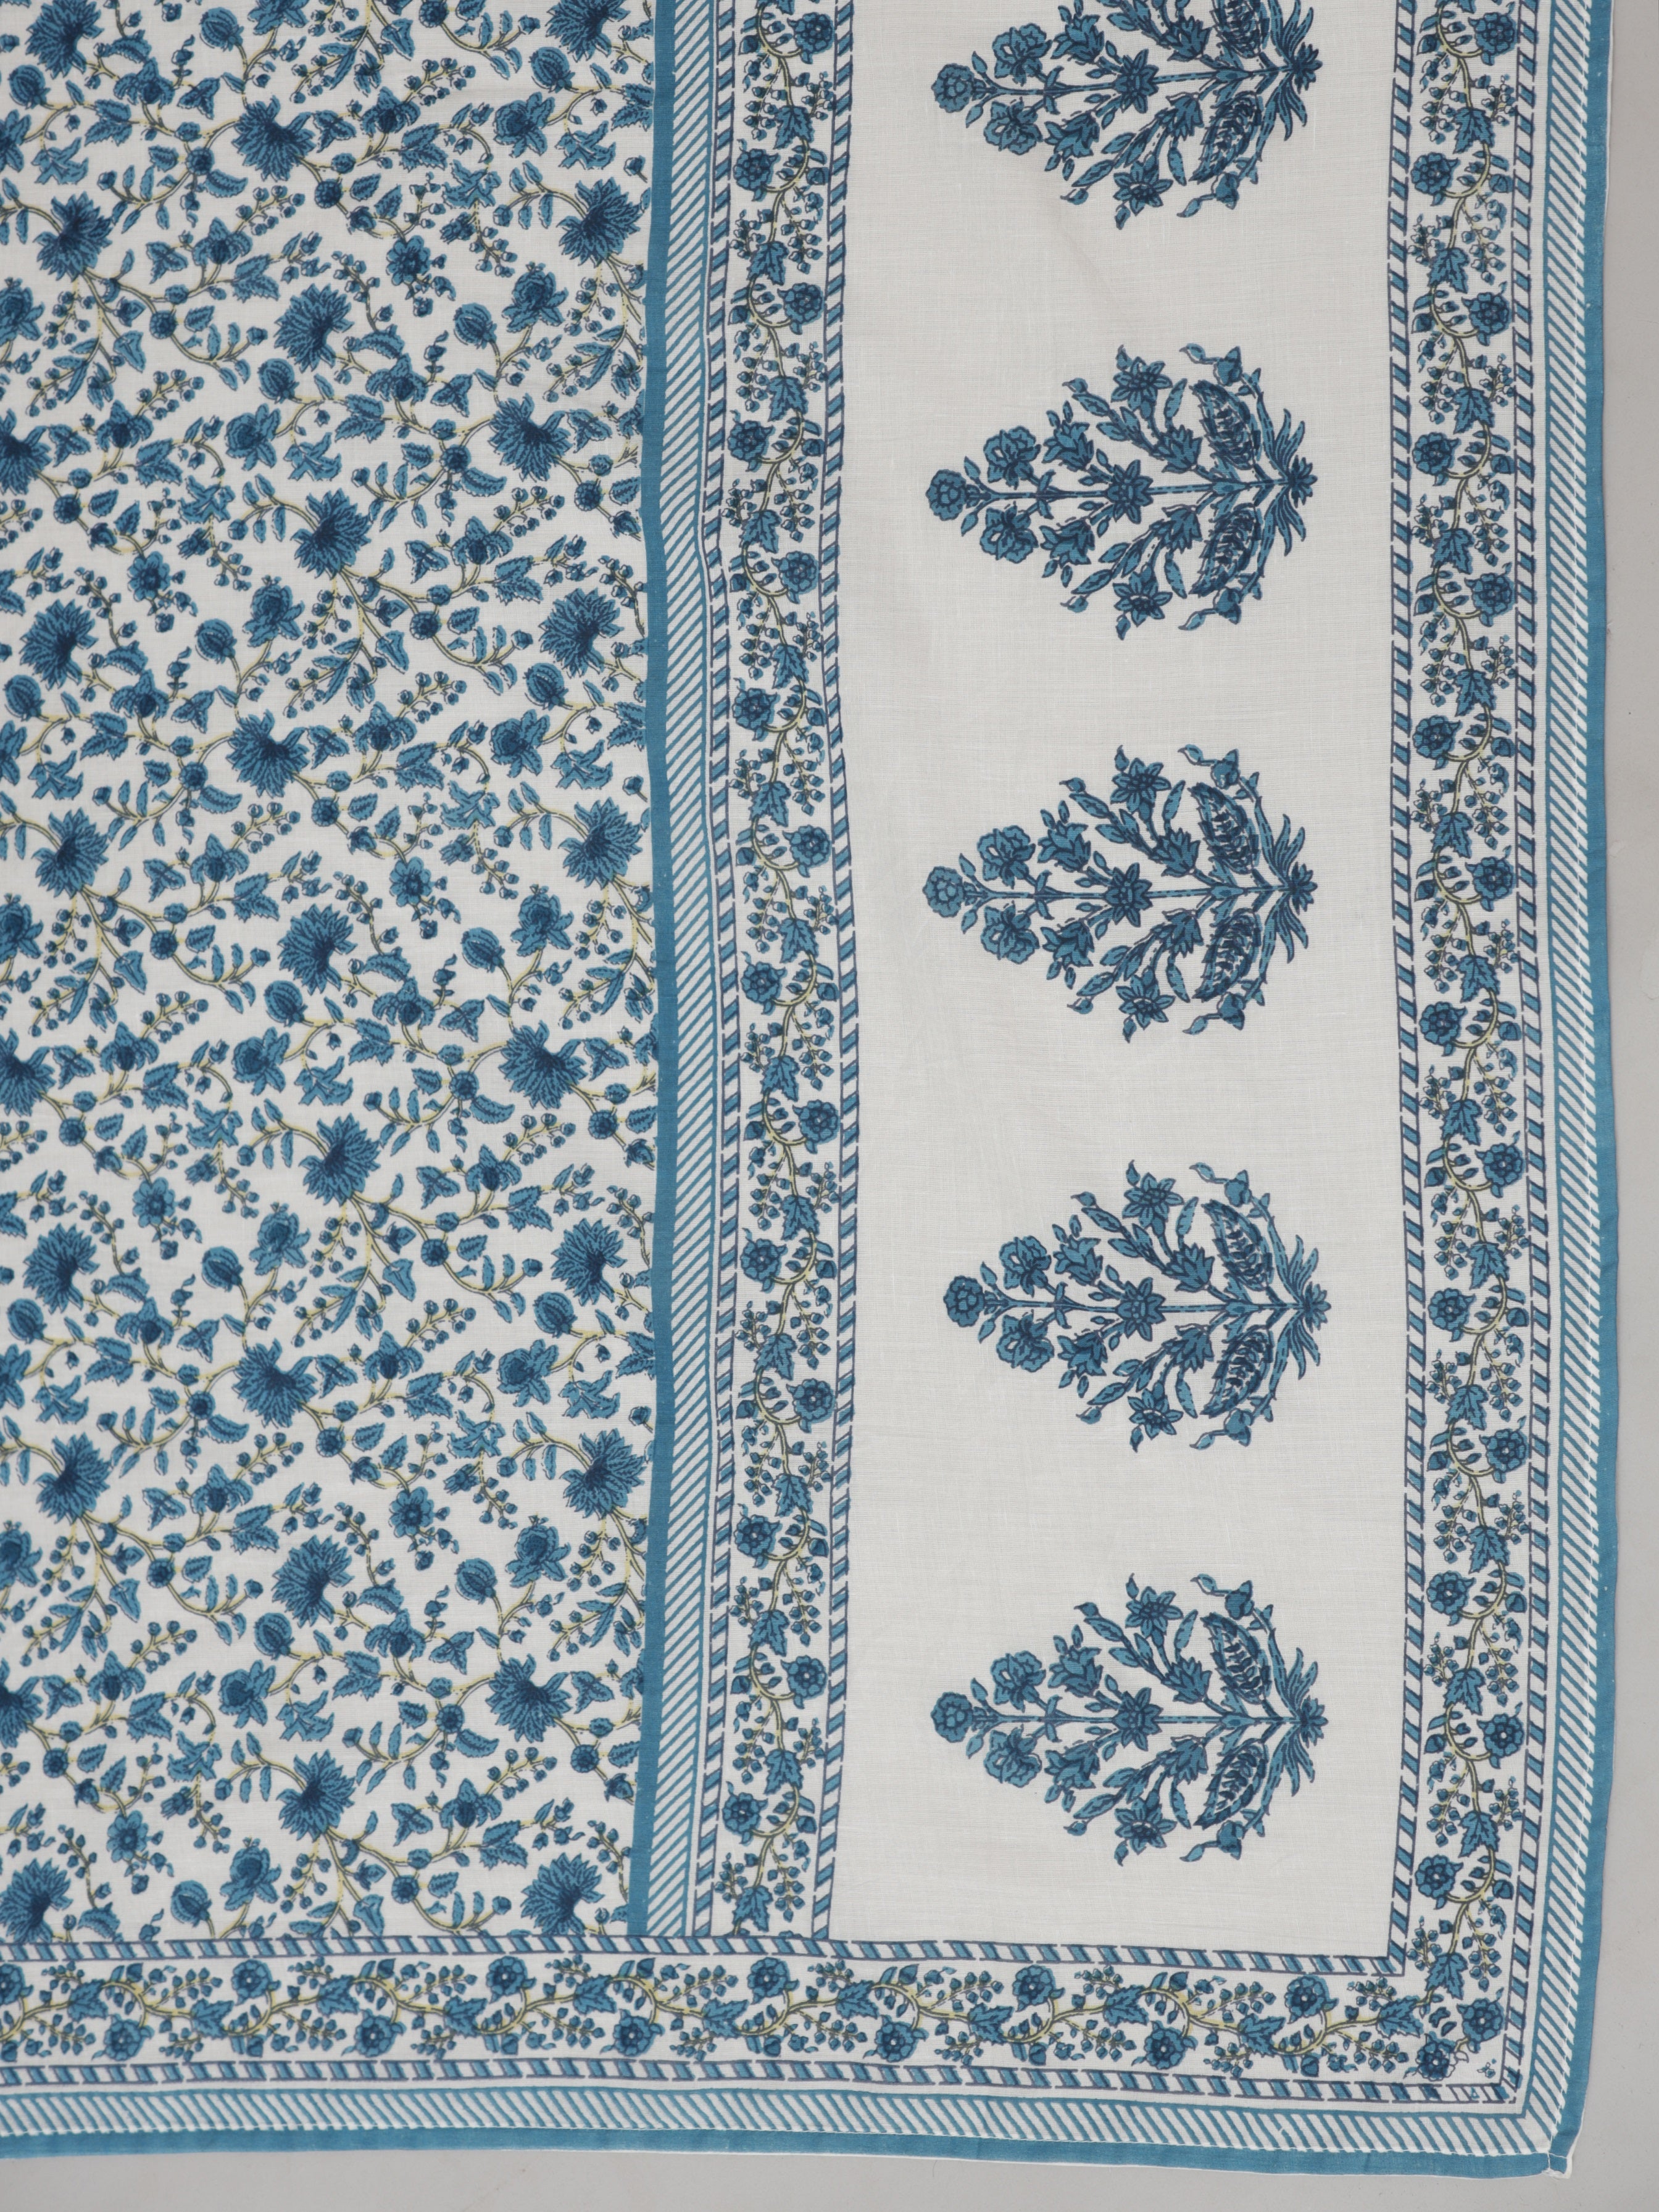 Juniper Women's Blue Cotton Cambric Floral Placement Printed Anarkali Kurta Sharara & Dupatta Set